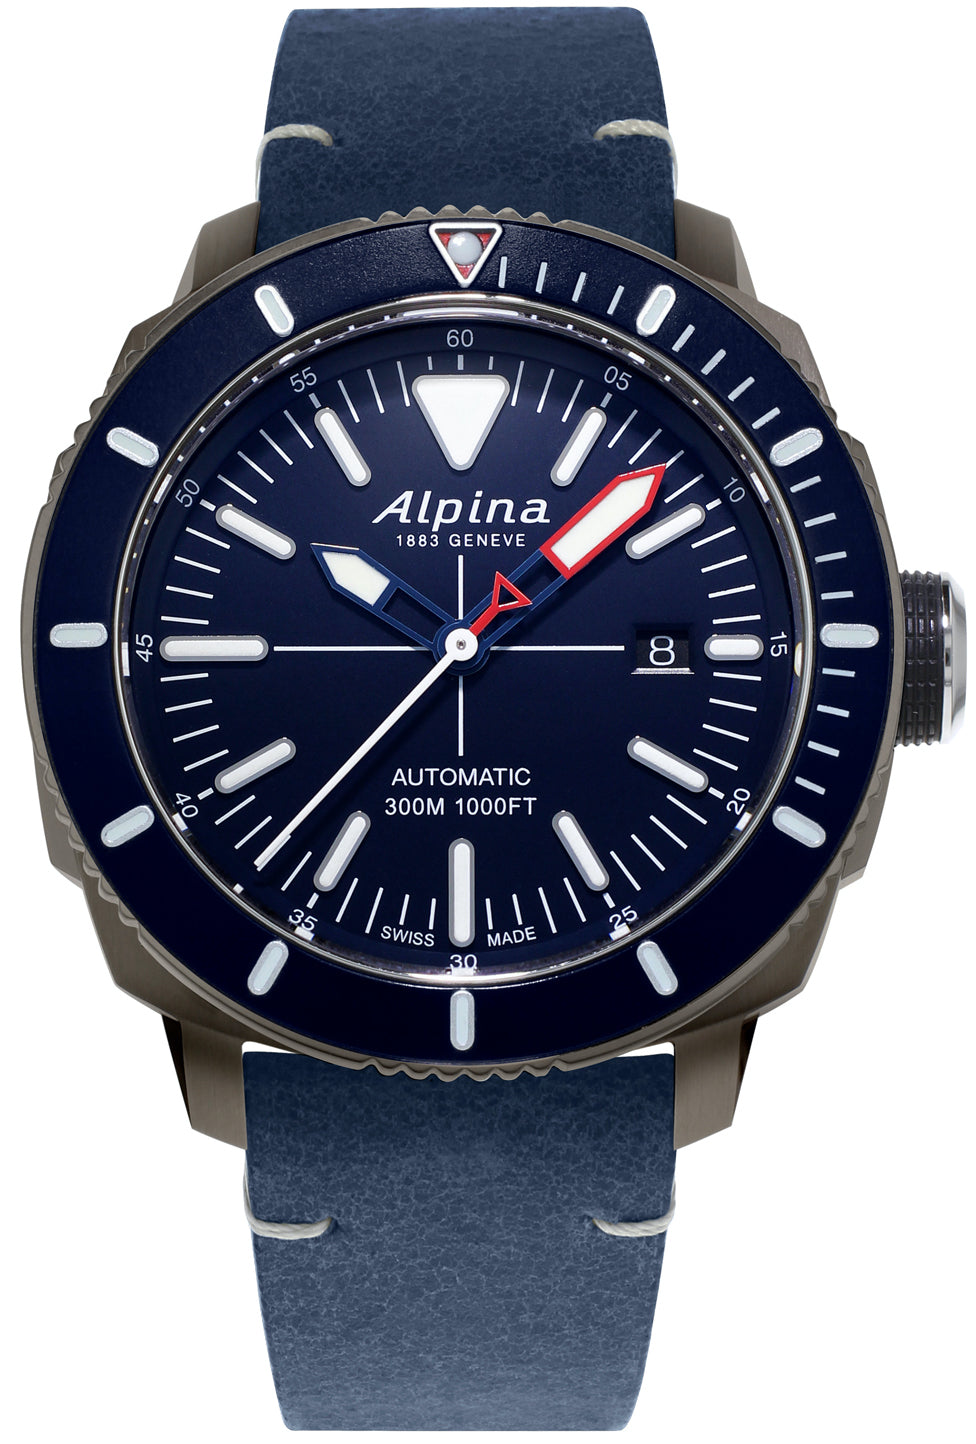 Photos - Wrist Watch Alpina Watch Seastrong Diver300 ALP-330 